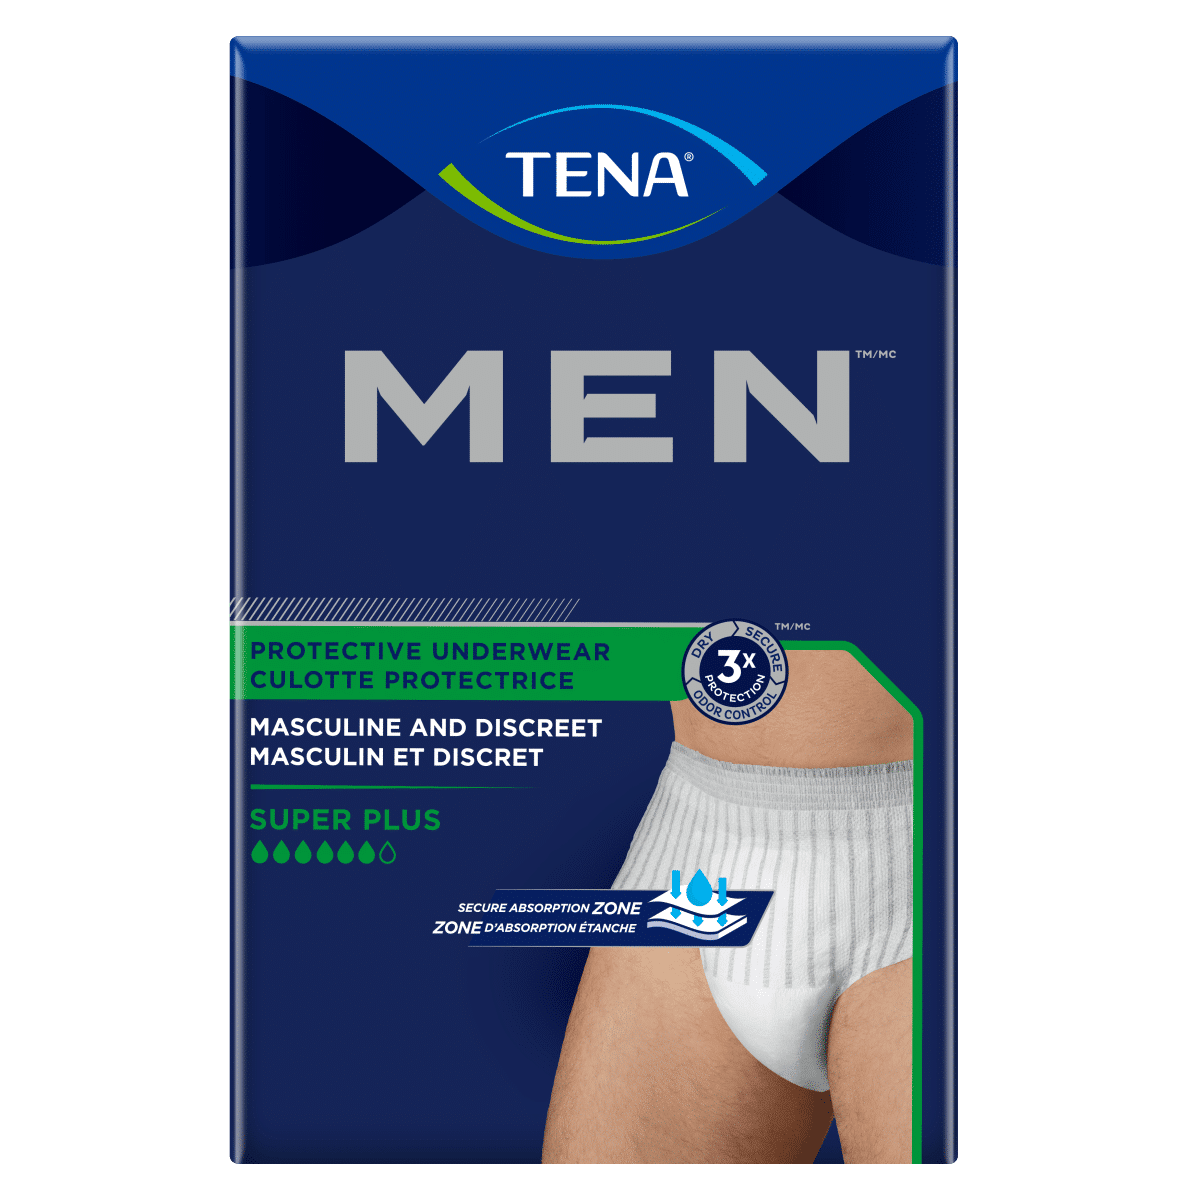 TENA Men's Super Plus Protective Underwear, S/M